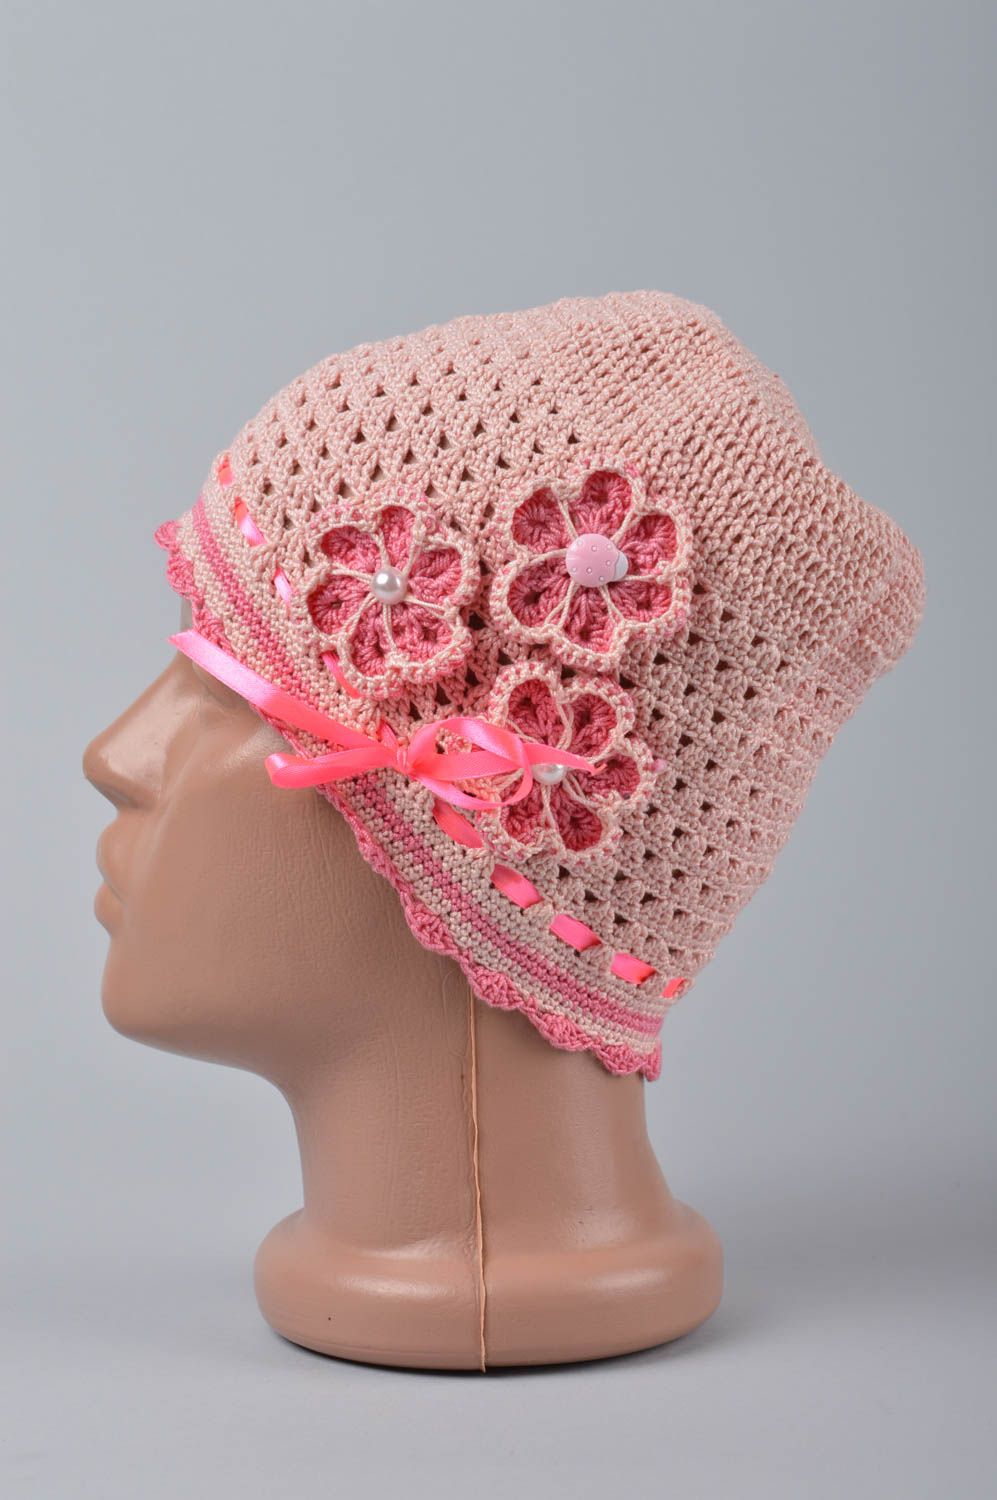 Stylish handmade crochet hat designs fashion kids accessories for girls photo 3